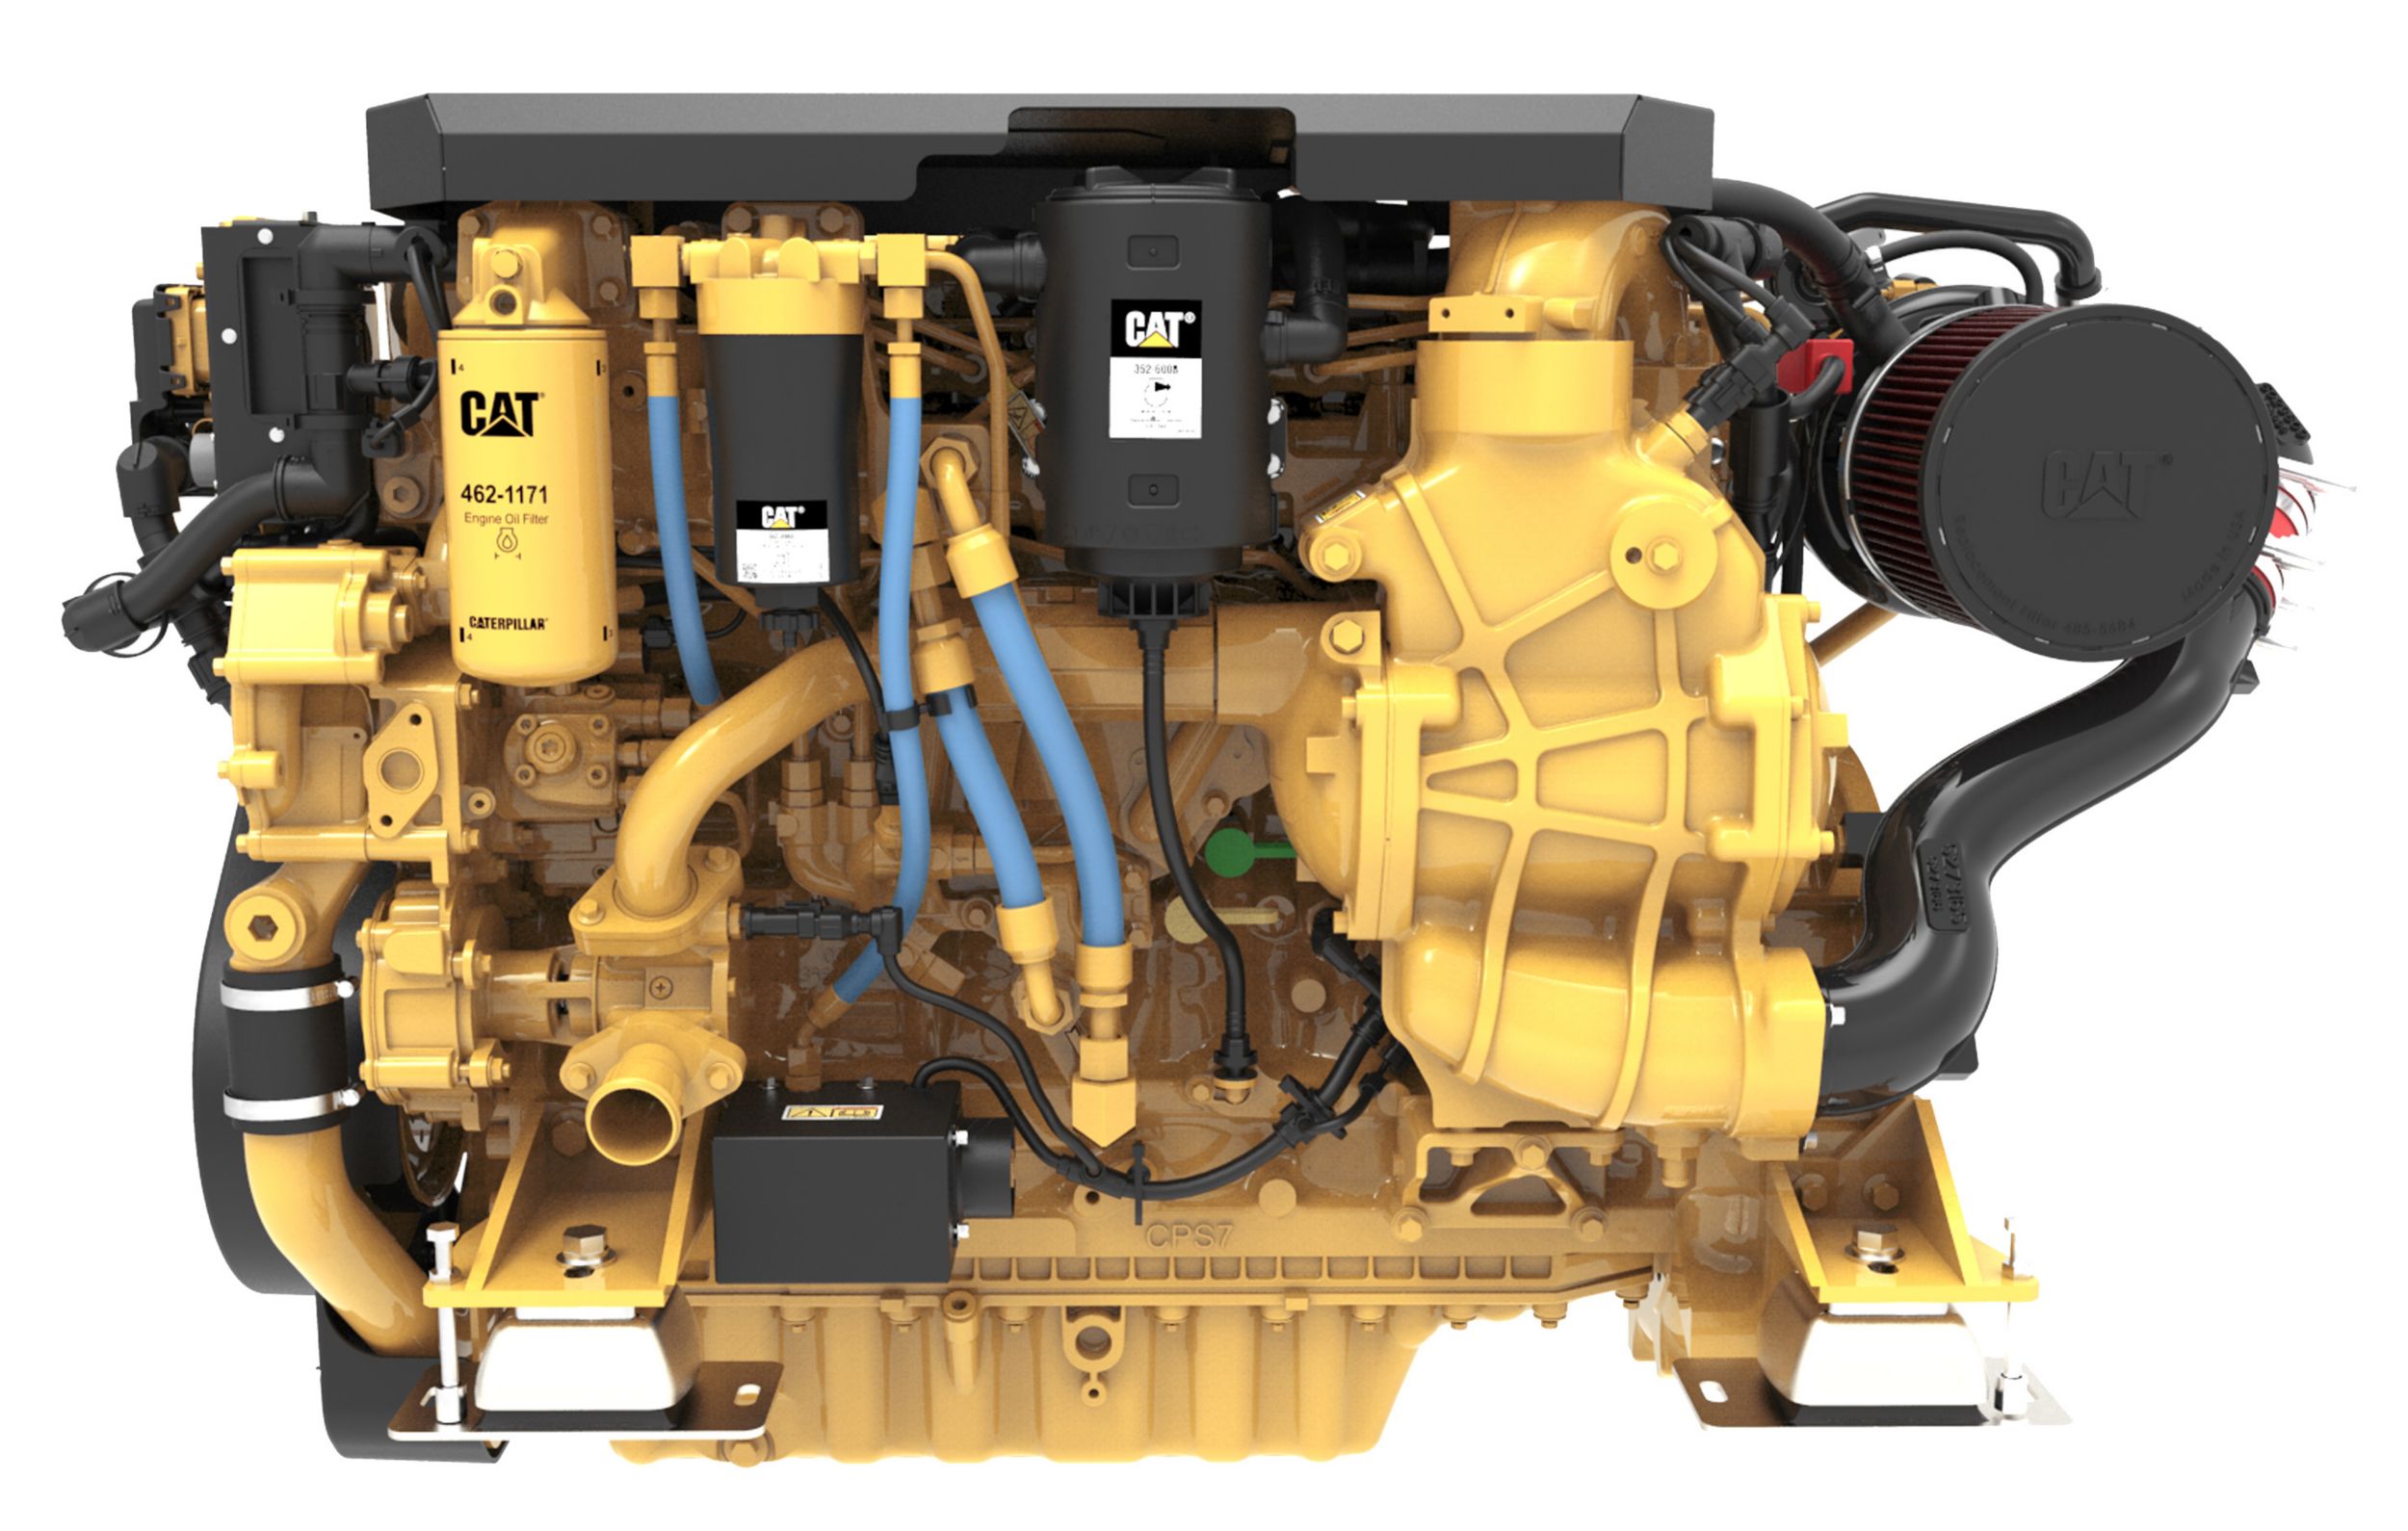 C7.1 Marine Propulsion Engine (U.S. EPA Tier 3 / IMO II)